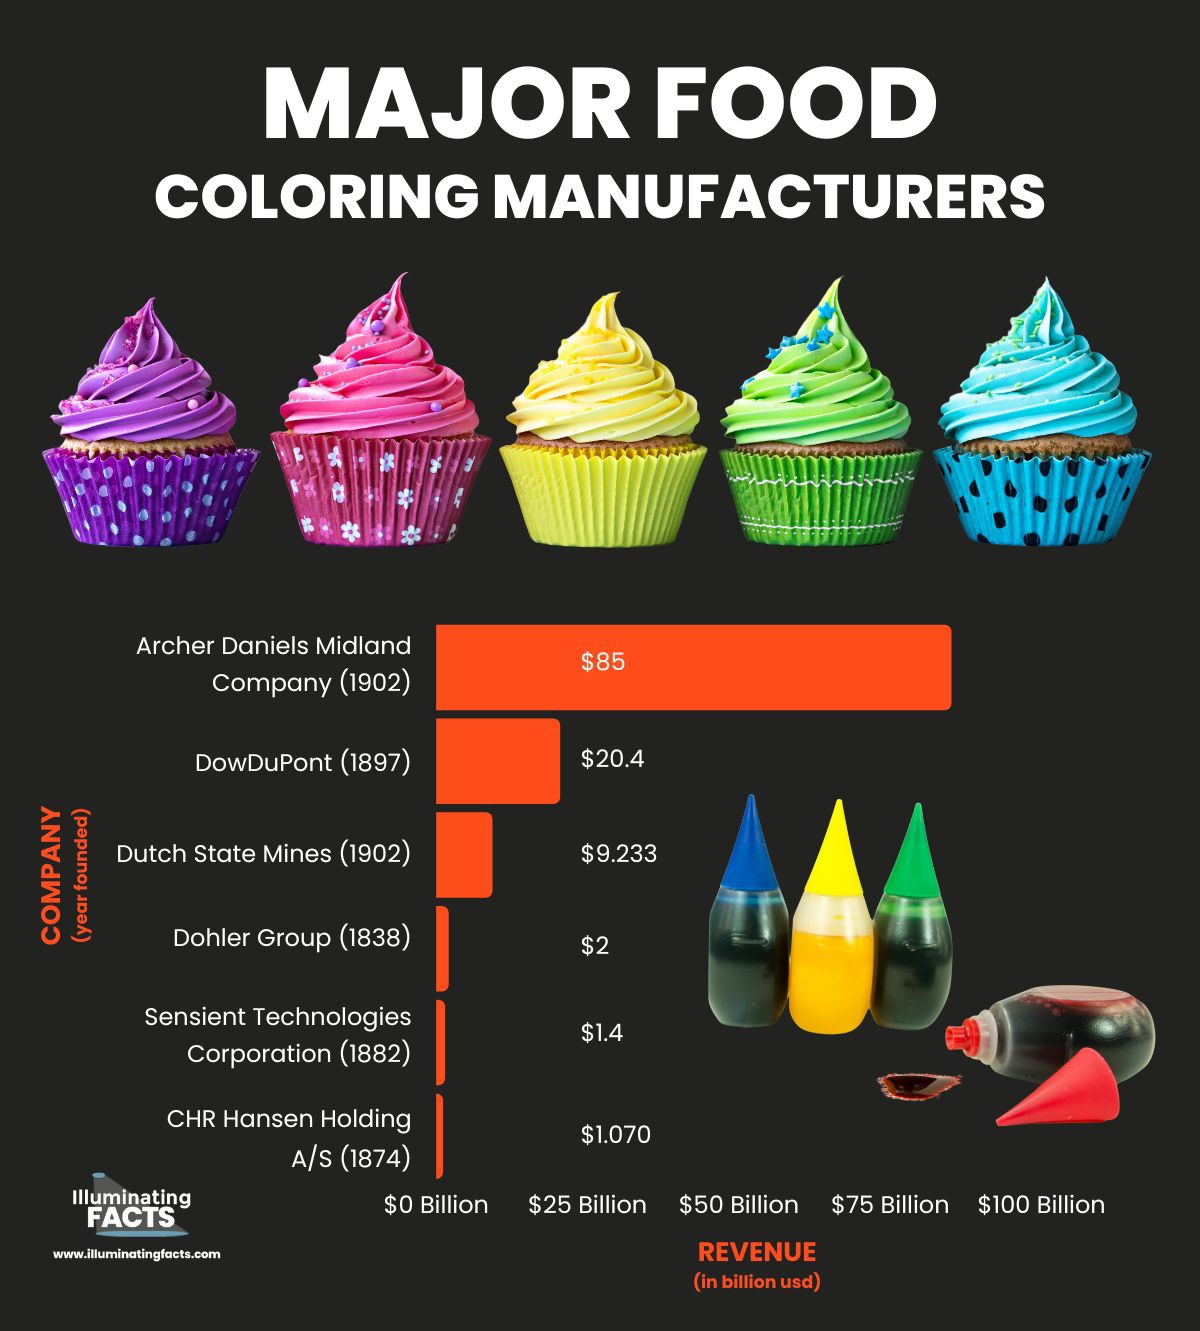 Major Food Coloring Manufacturers